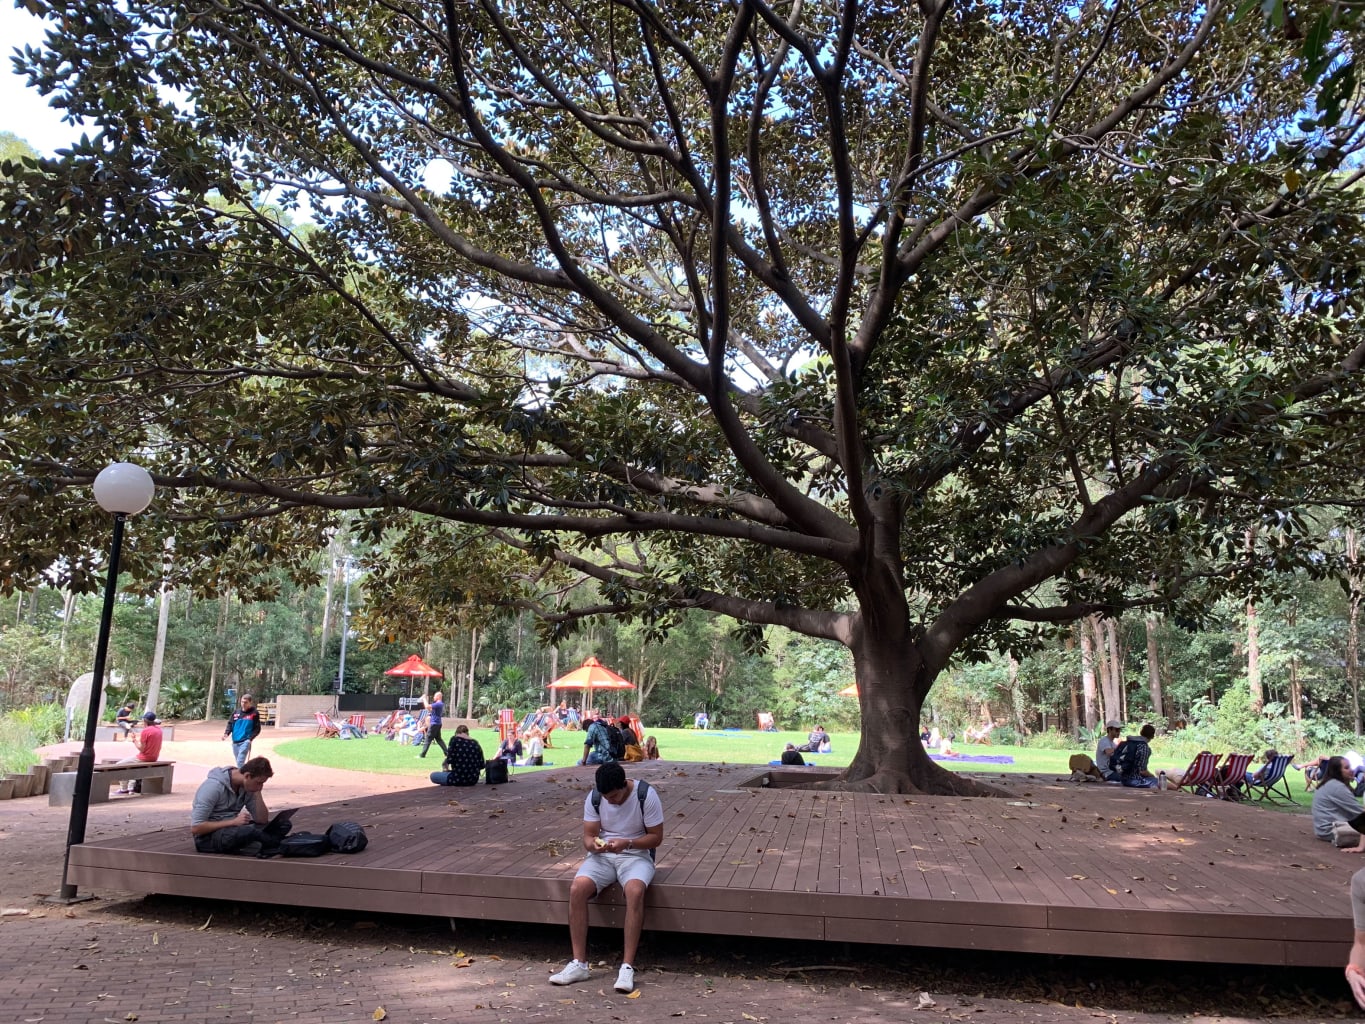 A park in Sydney, Australia.